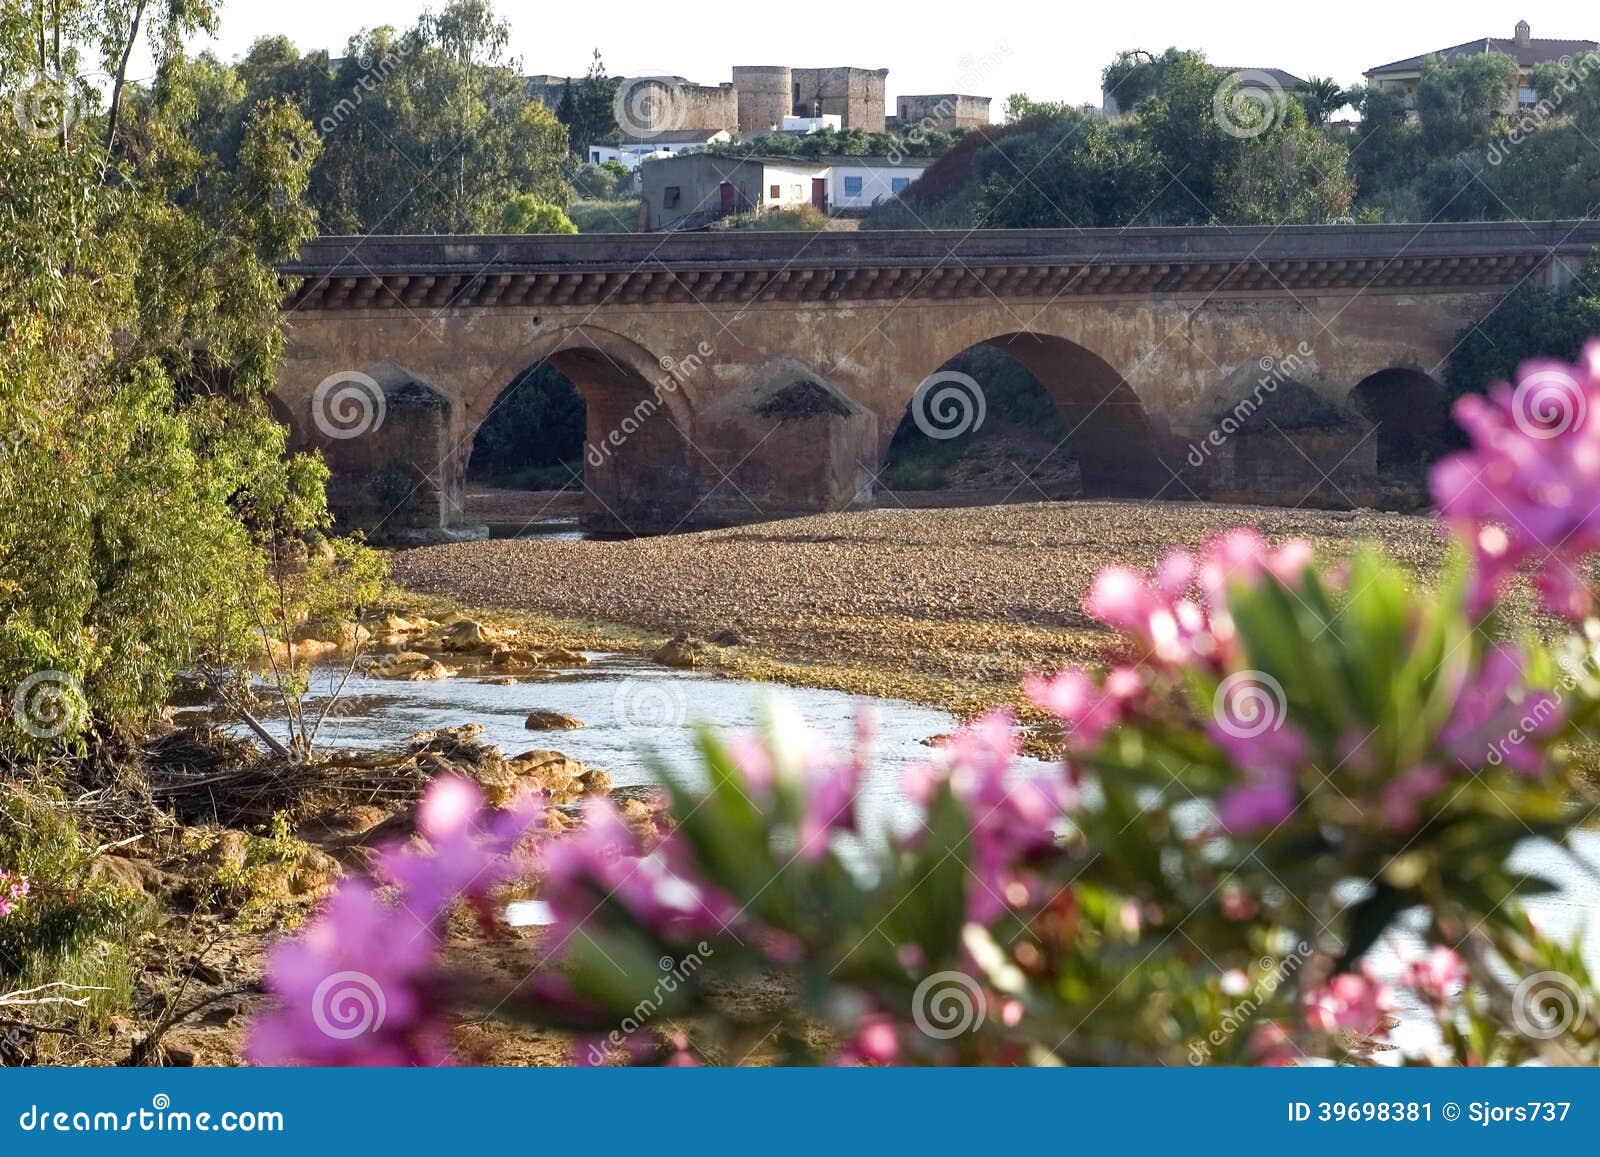 ancient bridge, dry riverbed, city niebla, spain